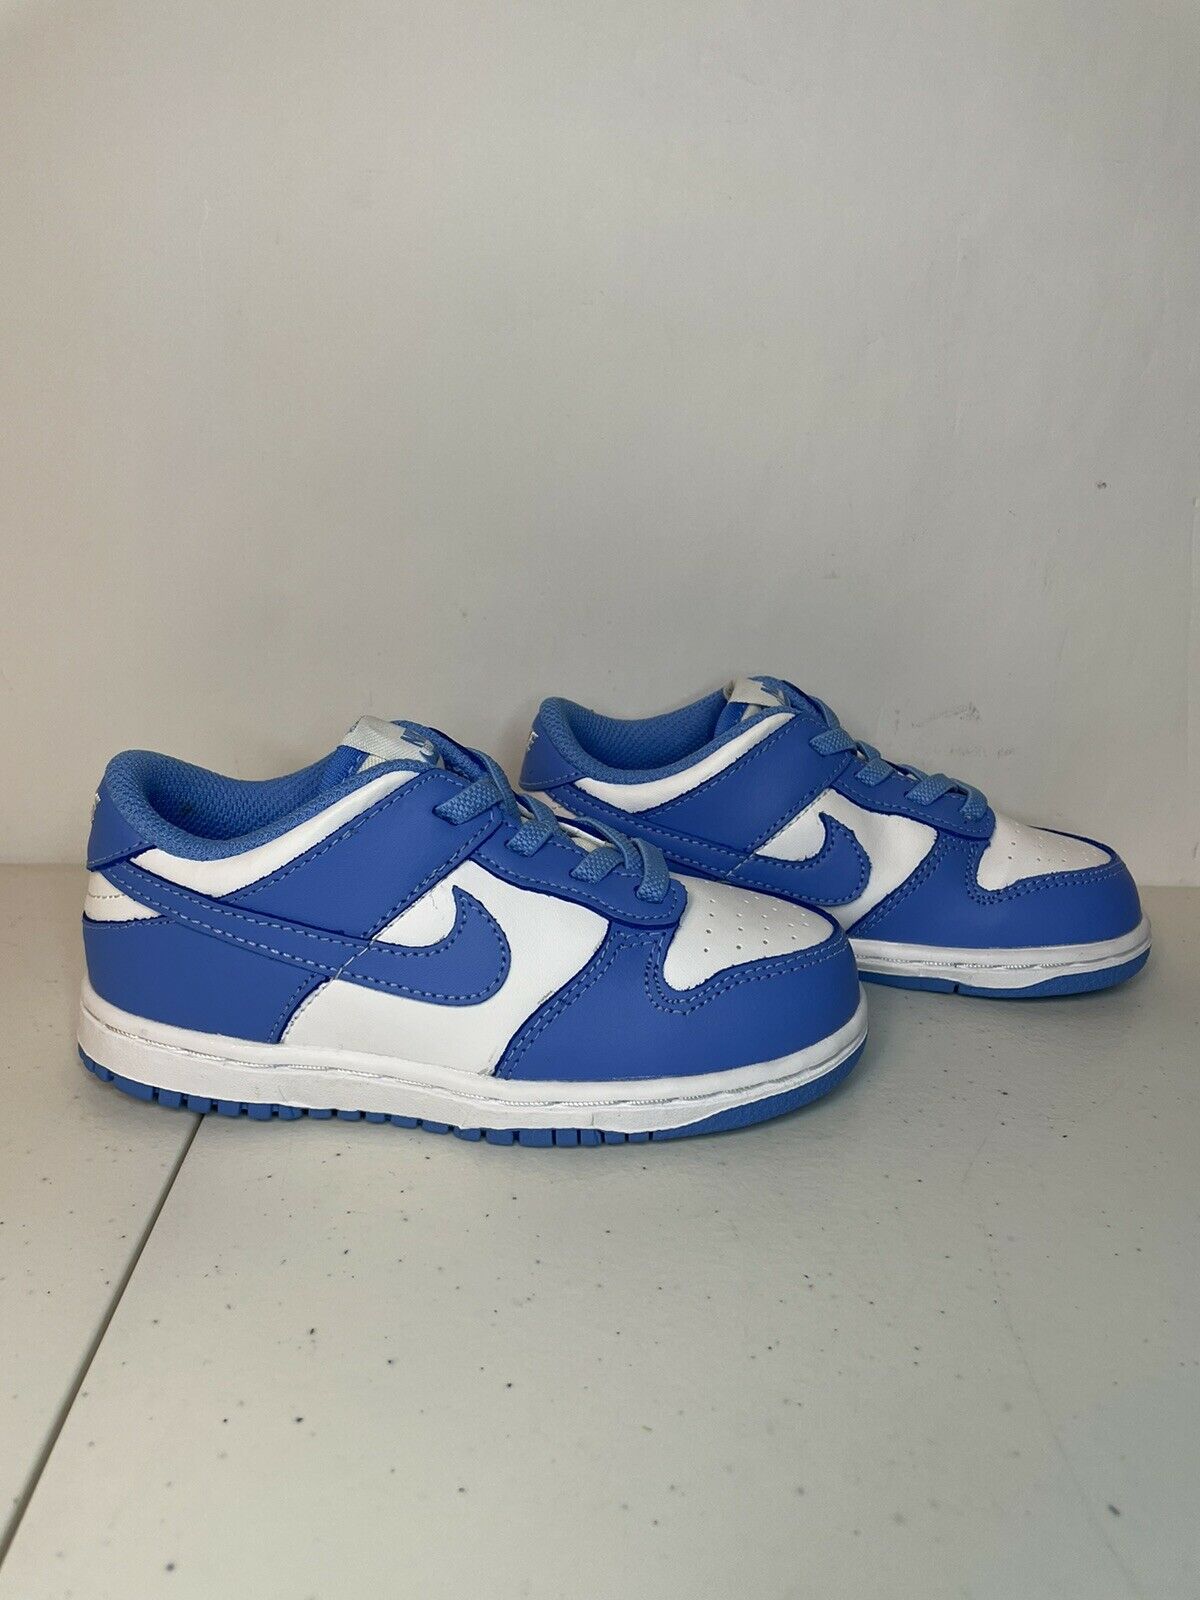 Nike Dunk Low (TD) Shoes 'UNC' White University Blue CW1589-103 Toddler Size 10c